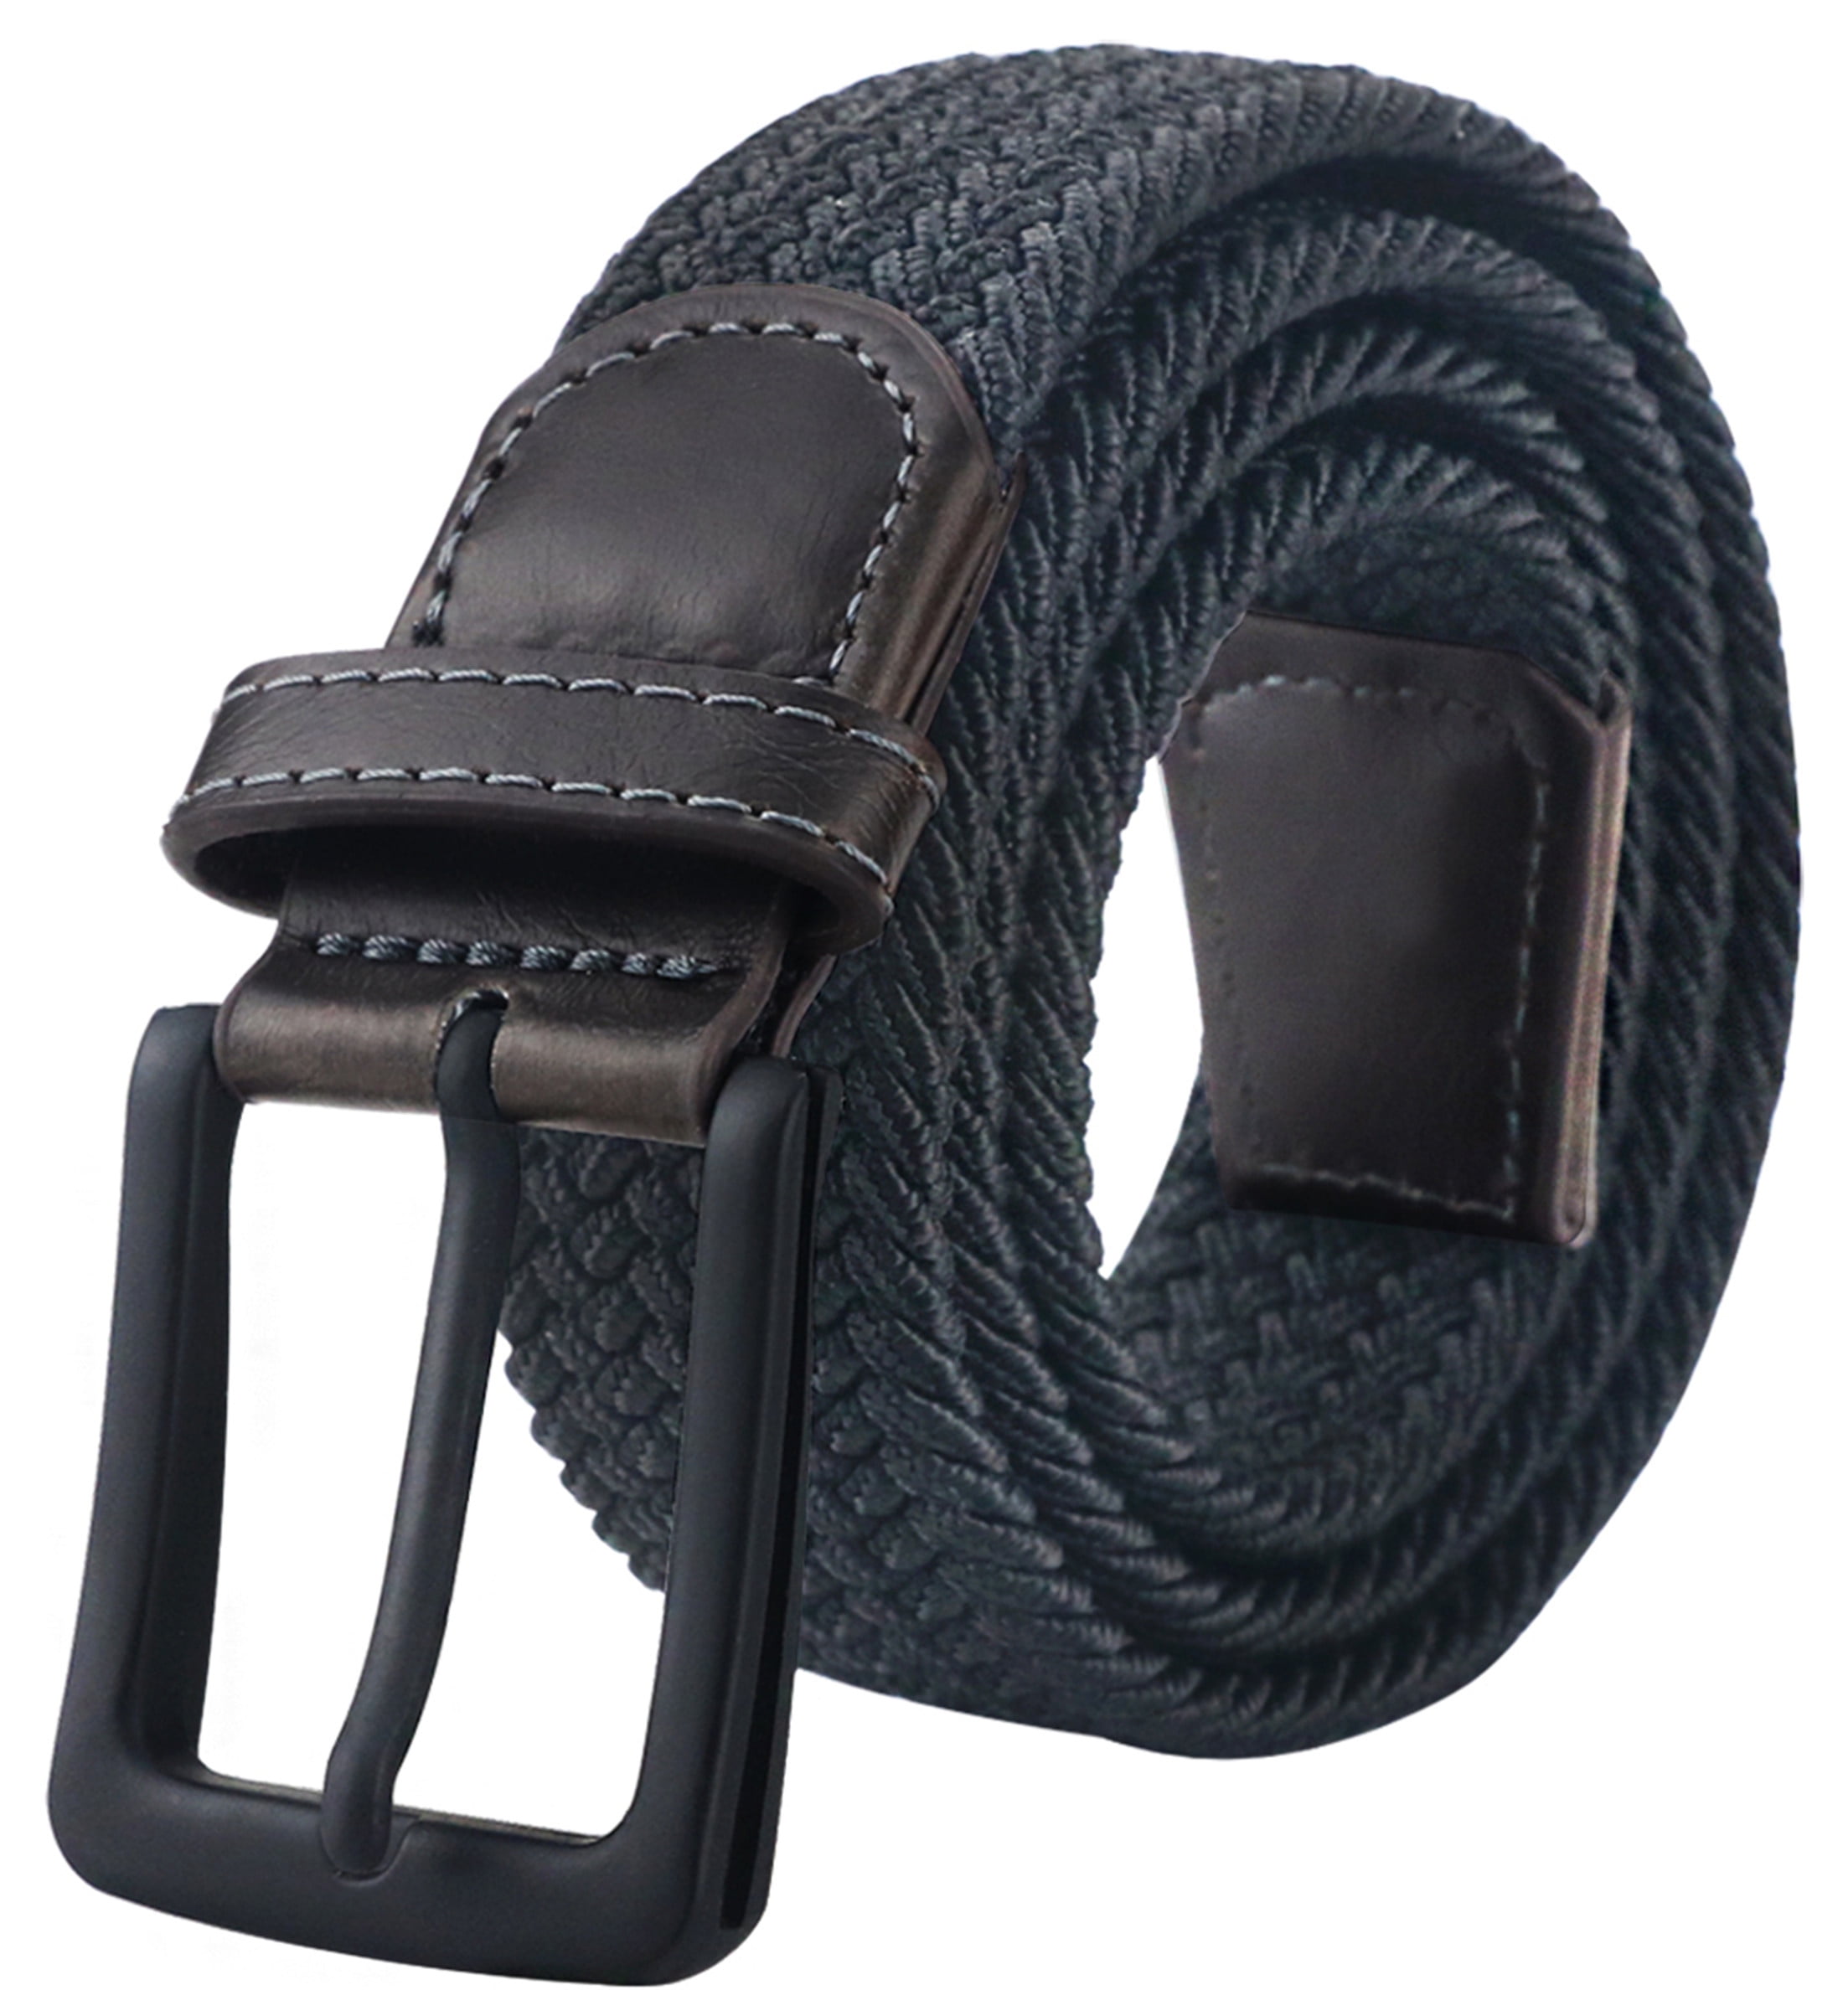 LionVII Men's Elastic Stretch Belt, Breathable Canvas Web Belt